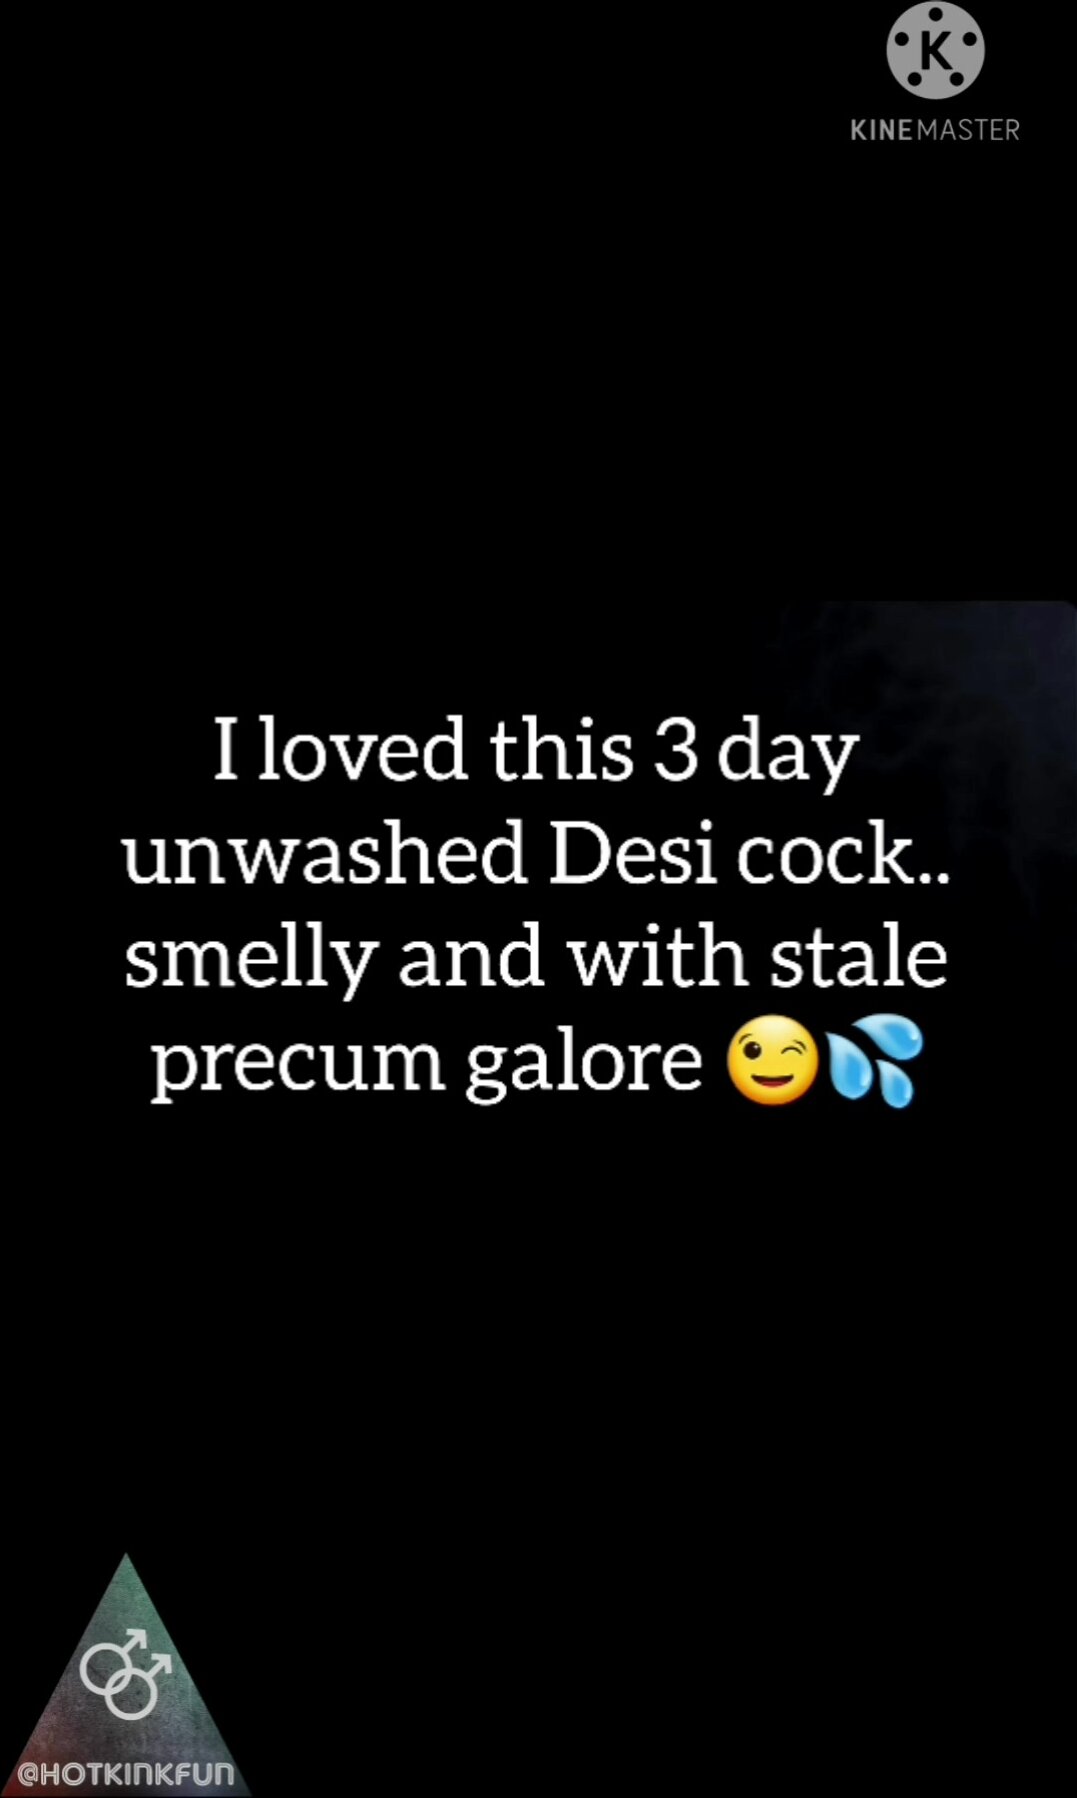 Punjabi desi cock with pre cum and Smegma cheese stink